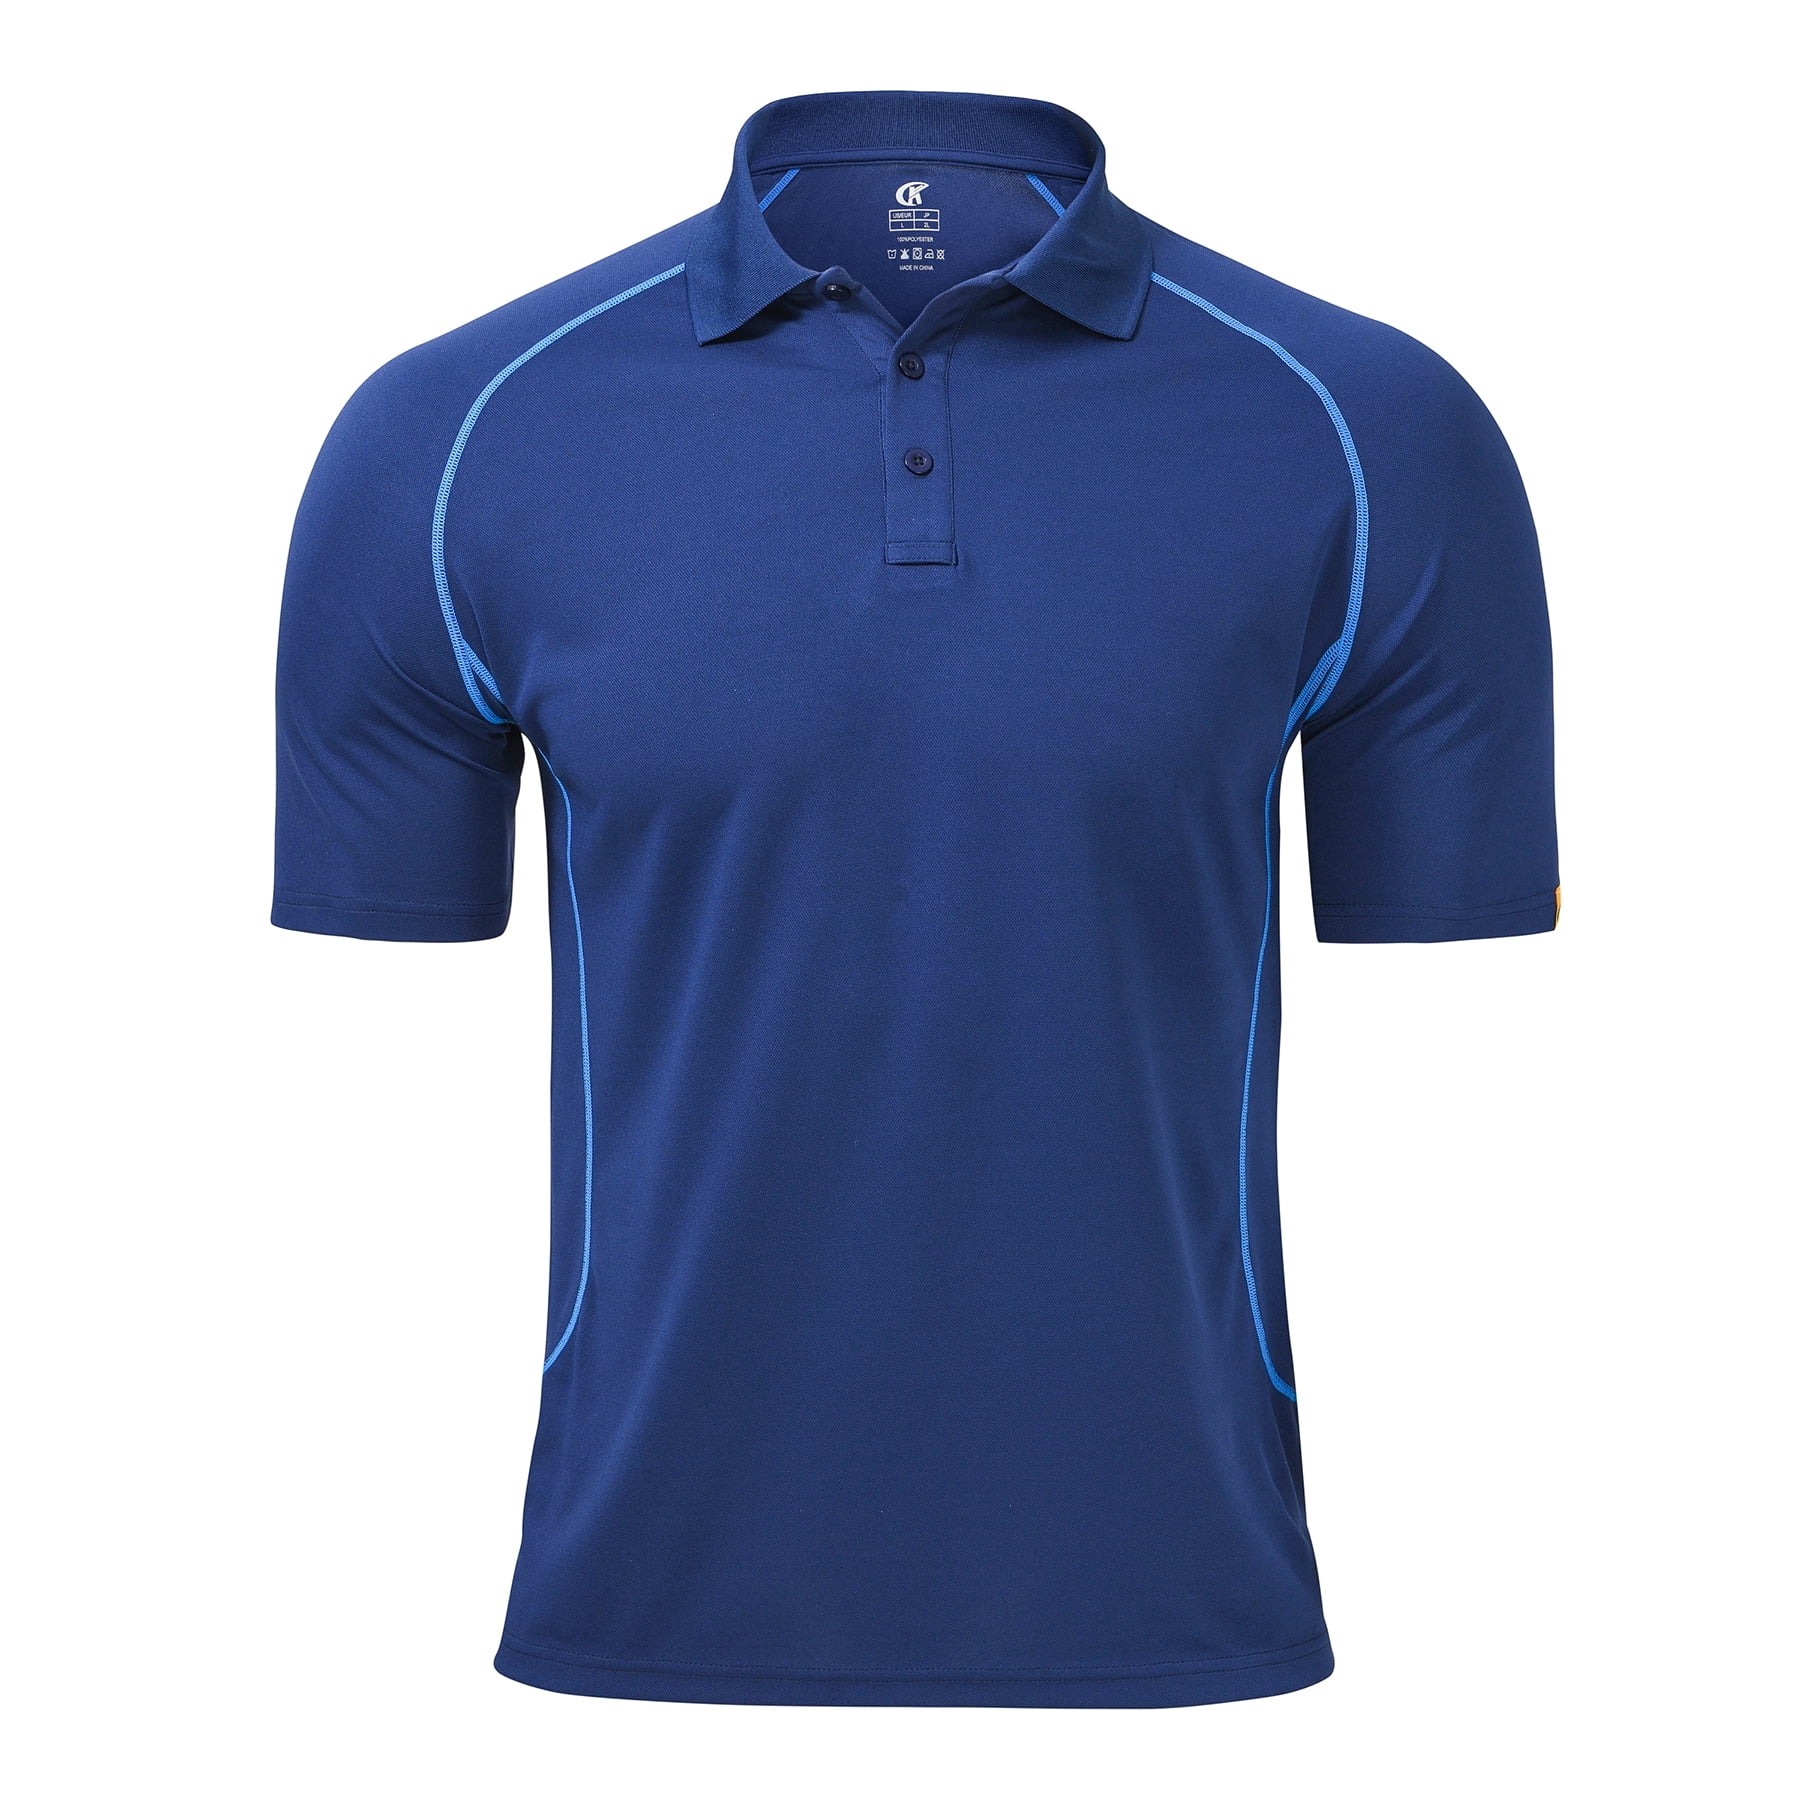 Yuyangdpb Men's Golf Shirts Short Sleeve Performance Polo Shirts ...